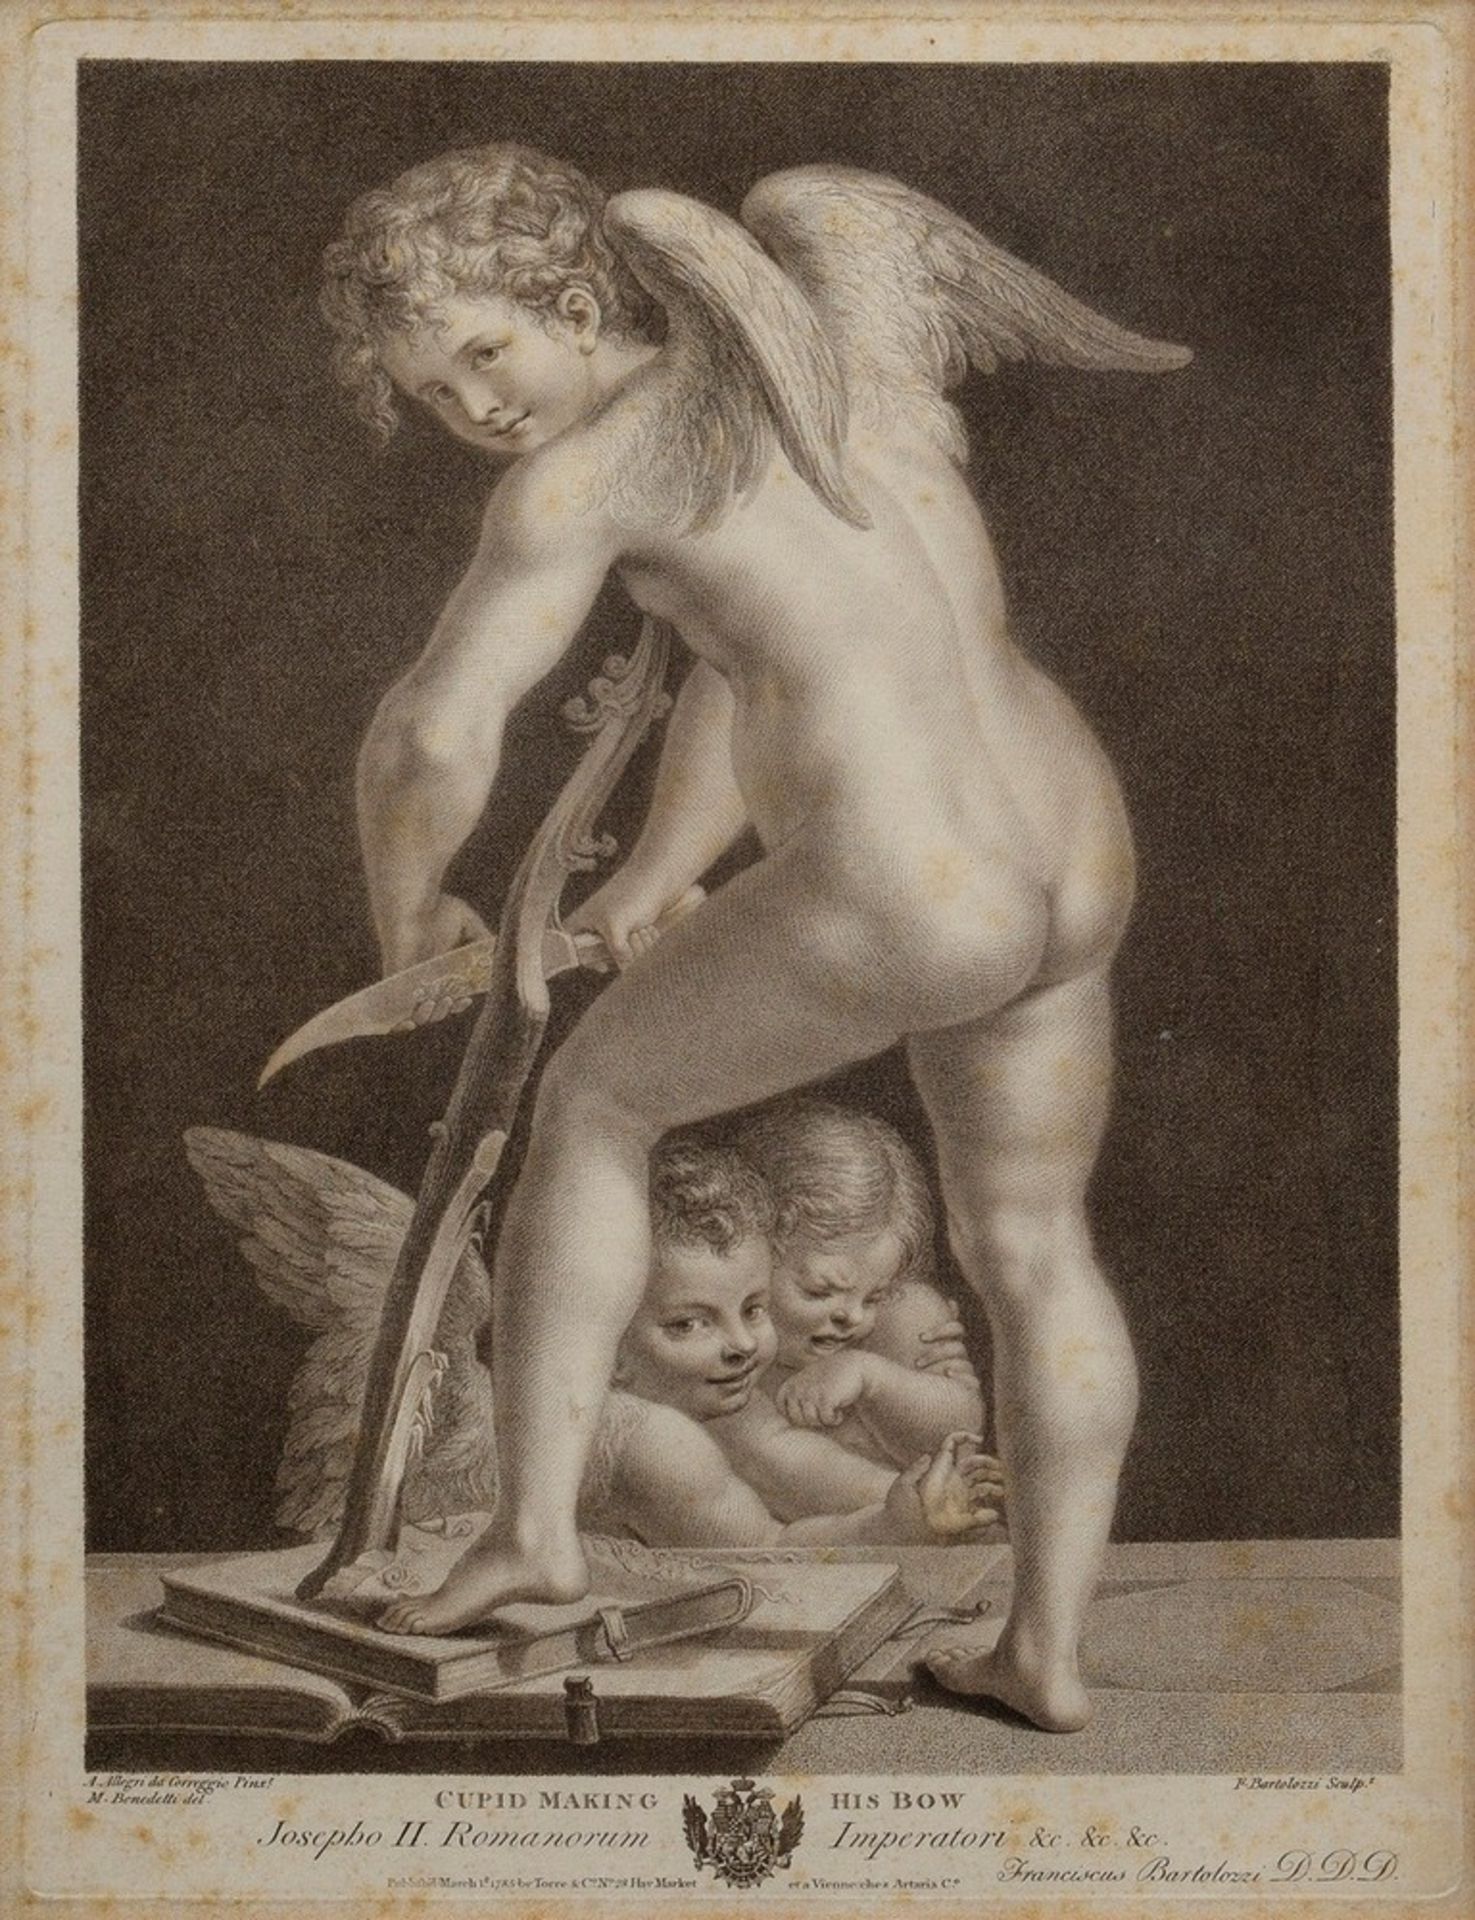 Bartolozzi, Francesco (1727-1815) "Cupid making his bow" nach Antonio Allegri C